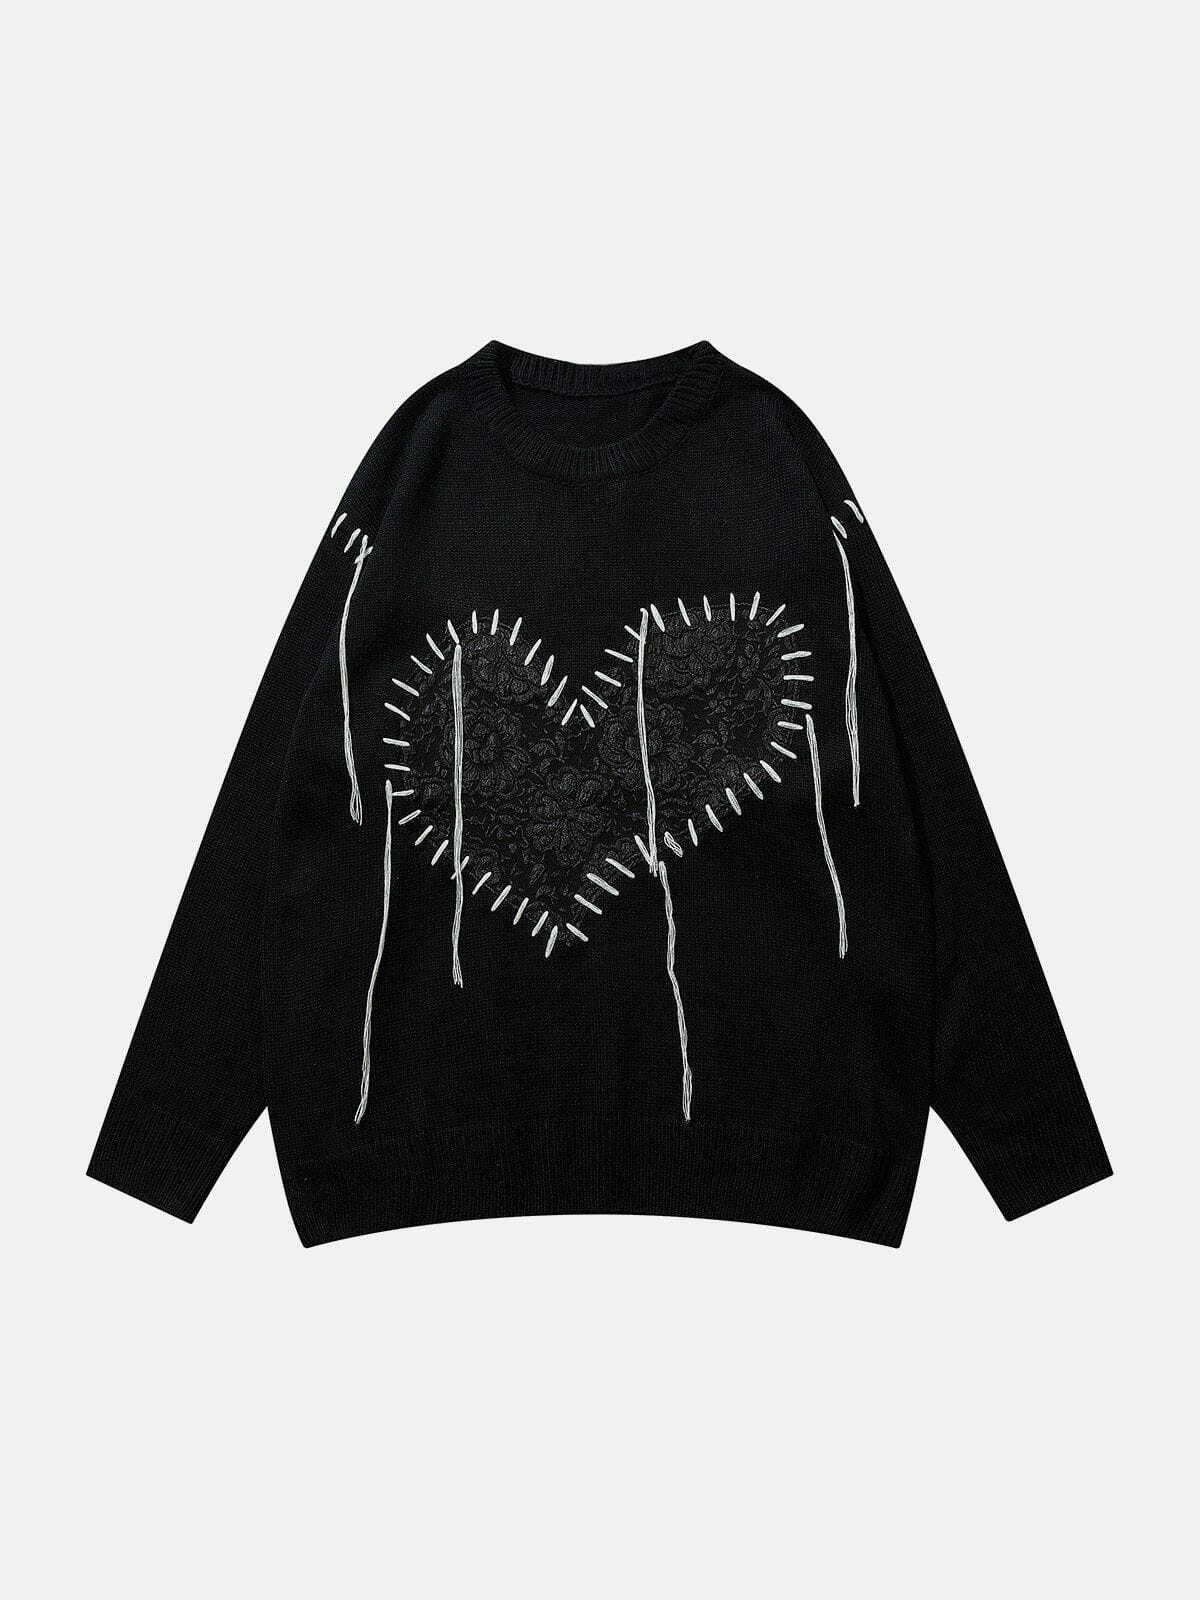 heartfelt patch love sweater y2k fashion statement 4446